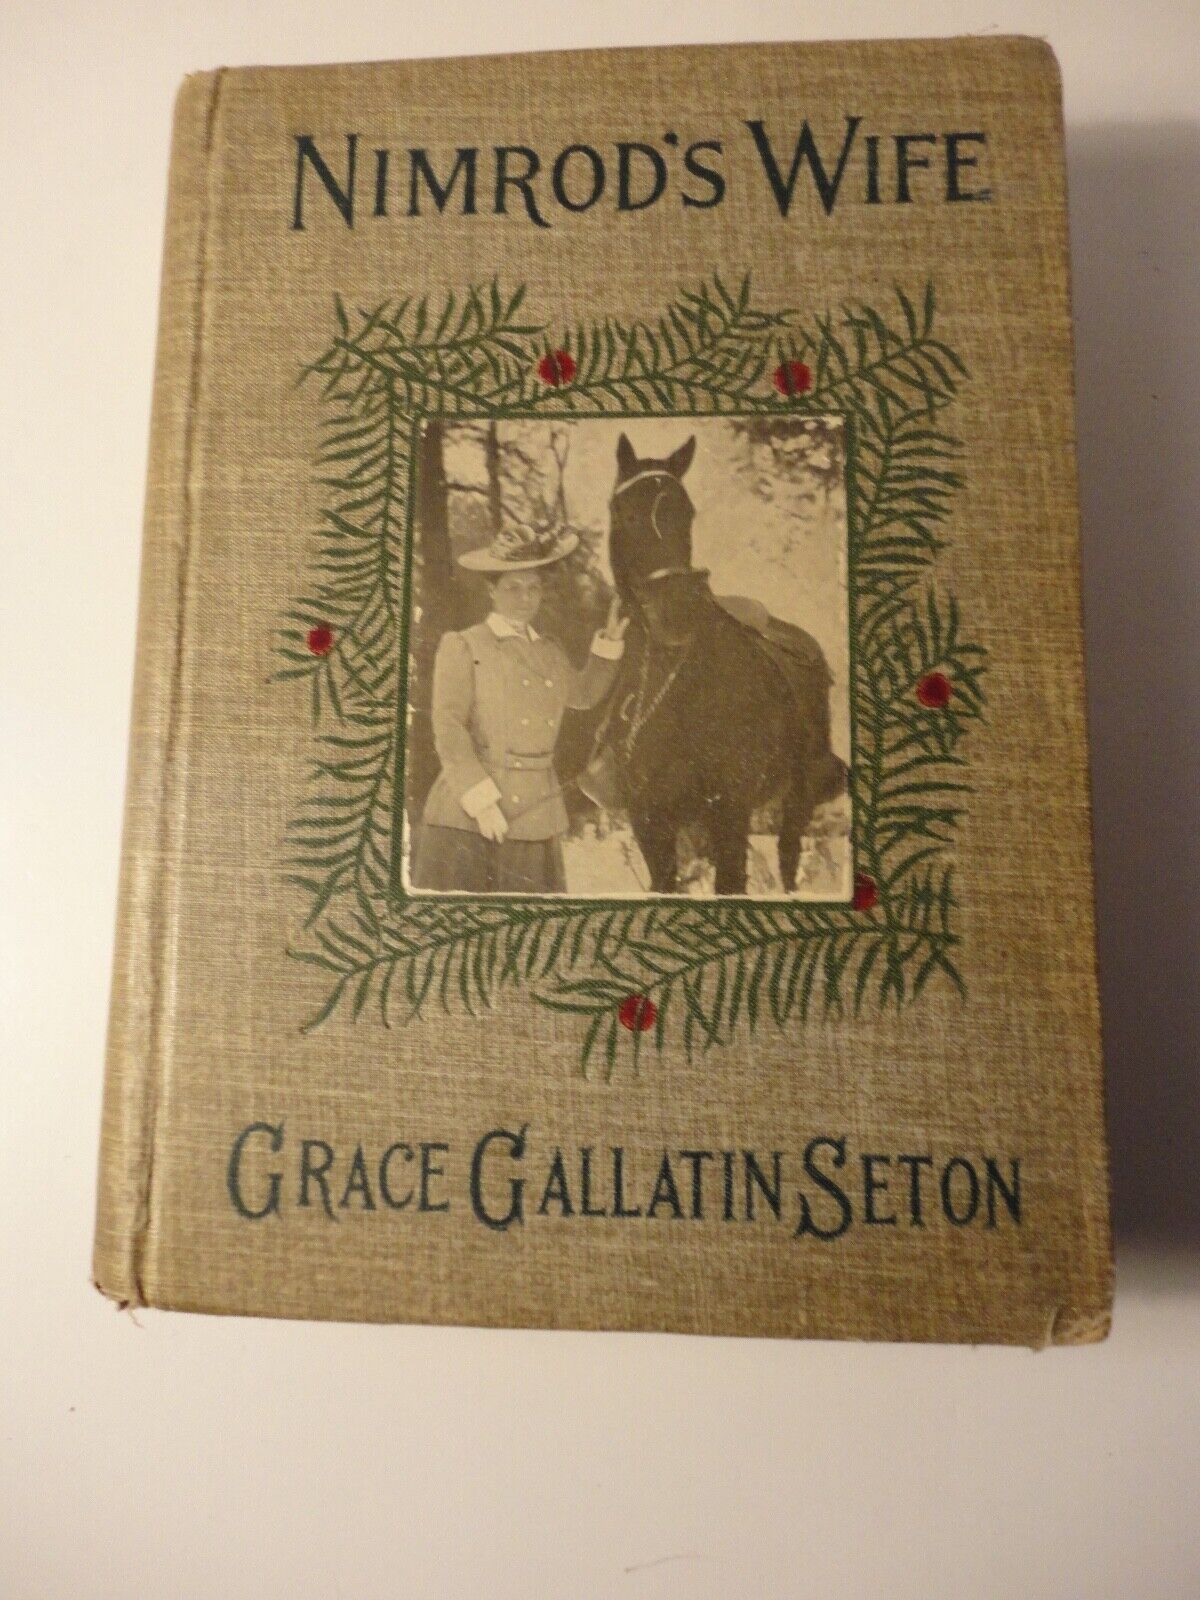 1907 edition of 'Nimrod's Wife' by Grace Gallatin Seton